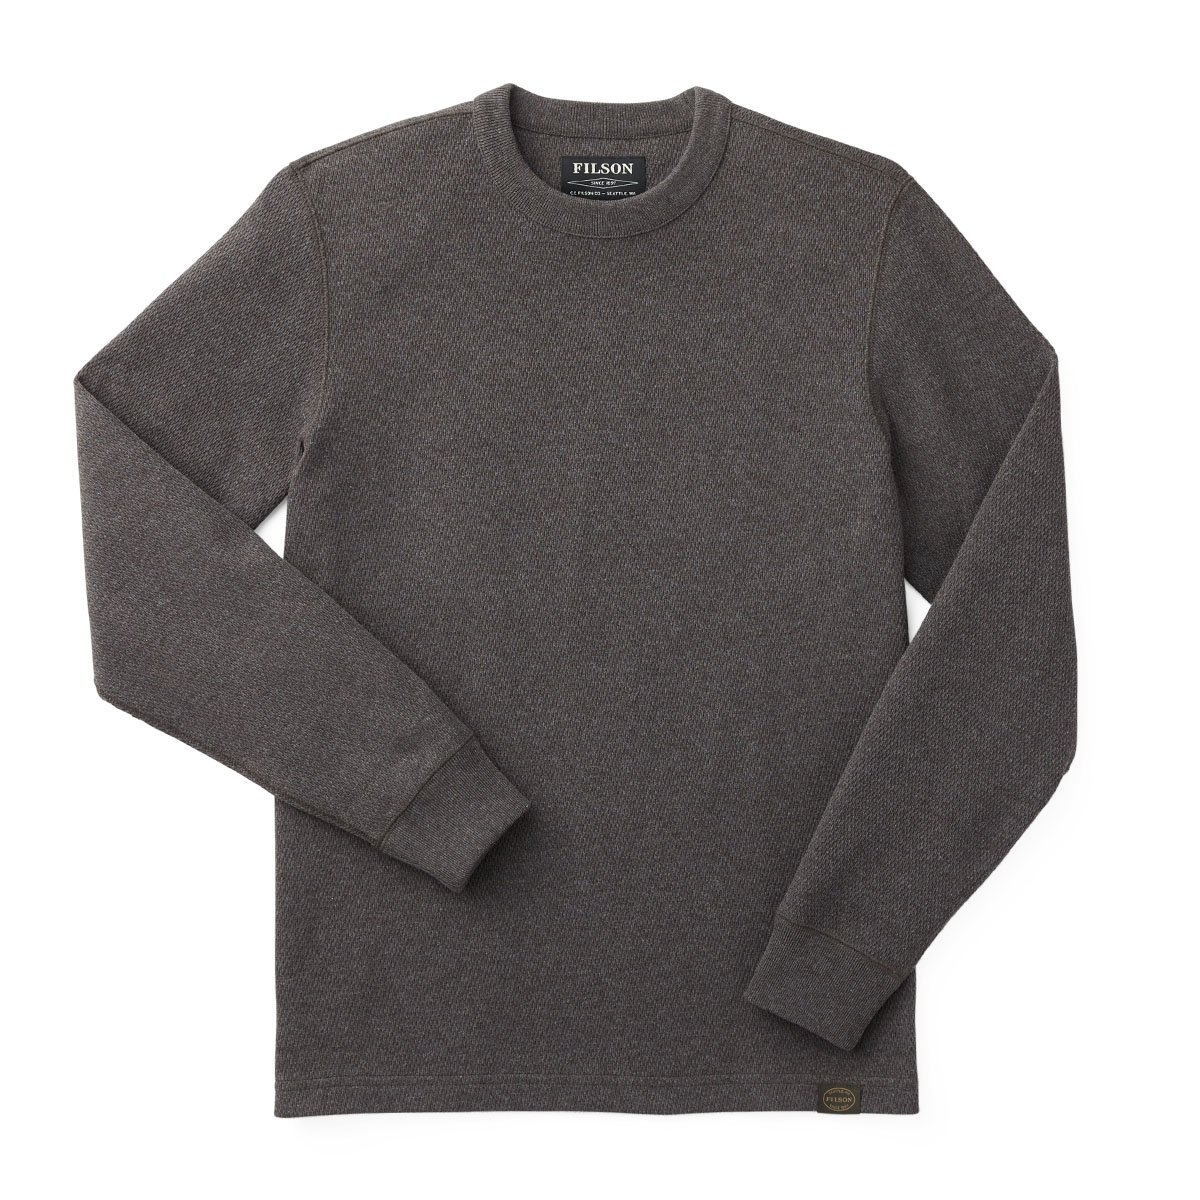 https://www.beaubags.com/media/catalog/product/f/i/filson-waffle-knit-thermal-crewneck-shirt-20183578-charcoal-front.jpg